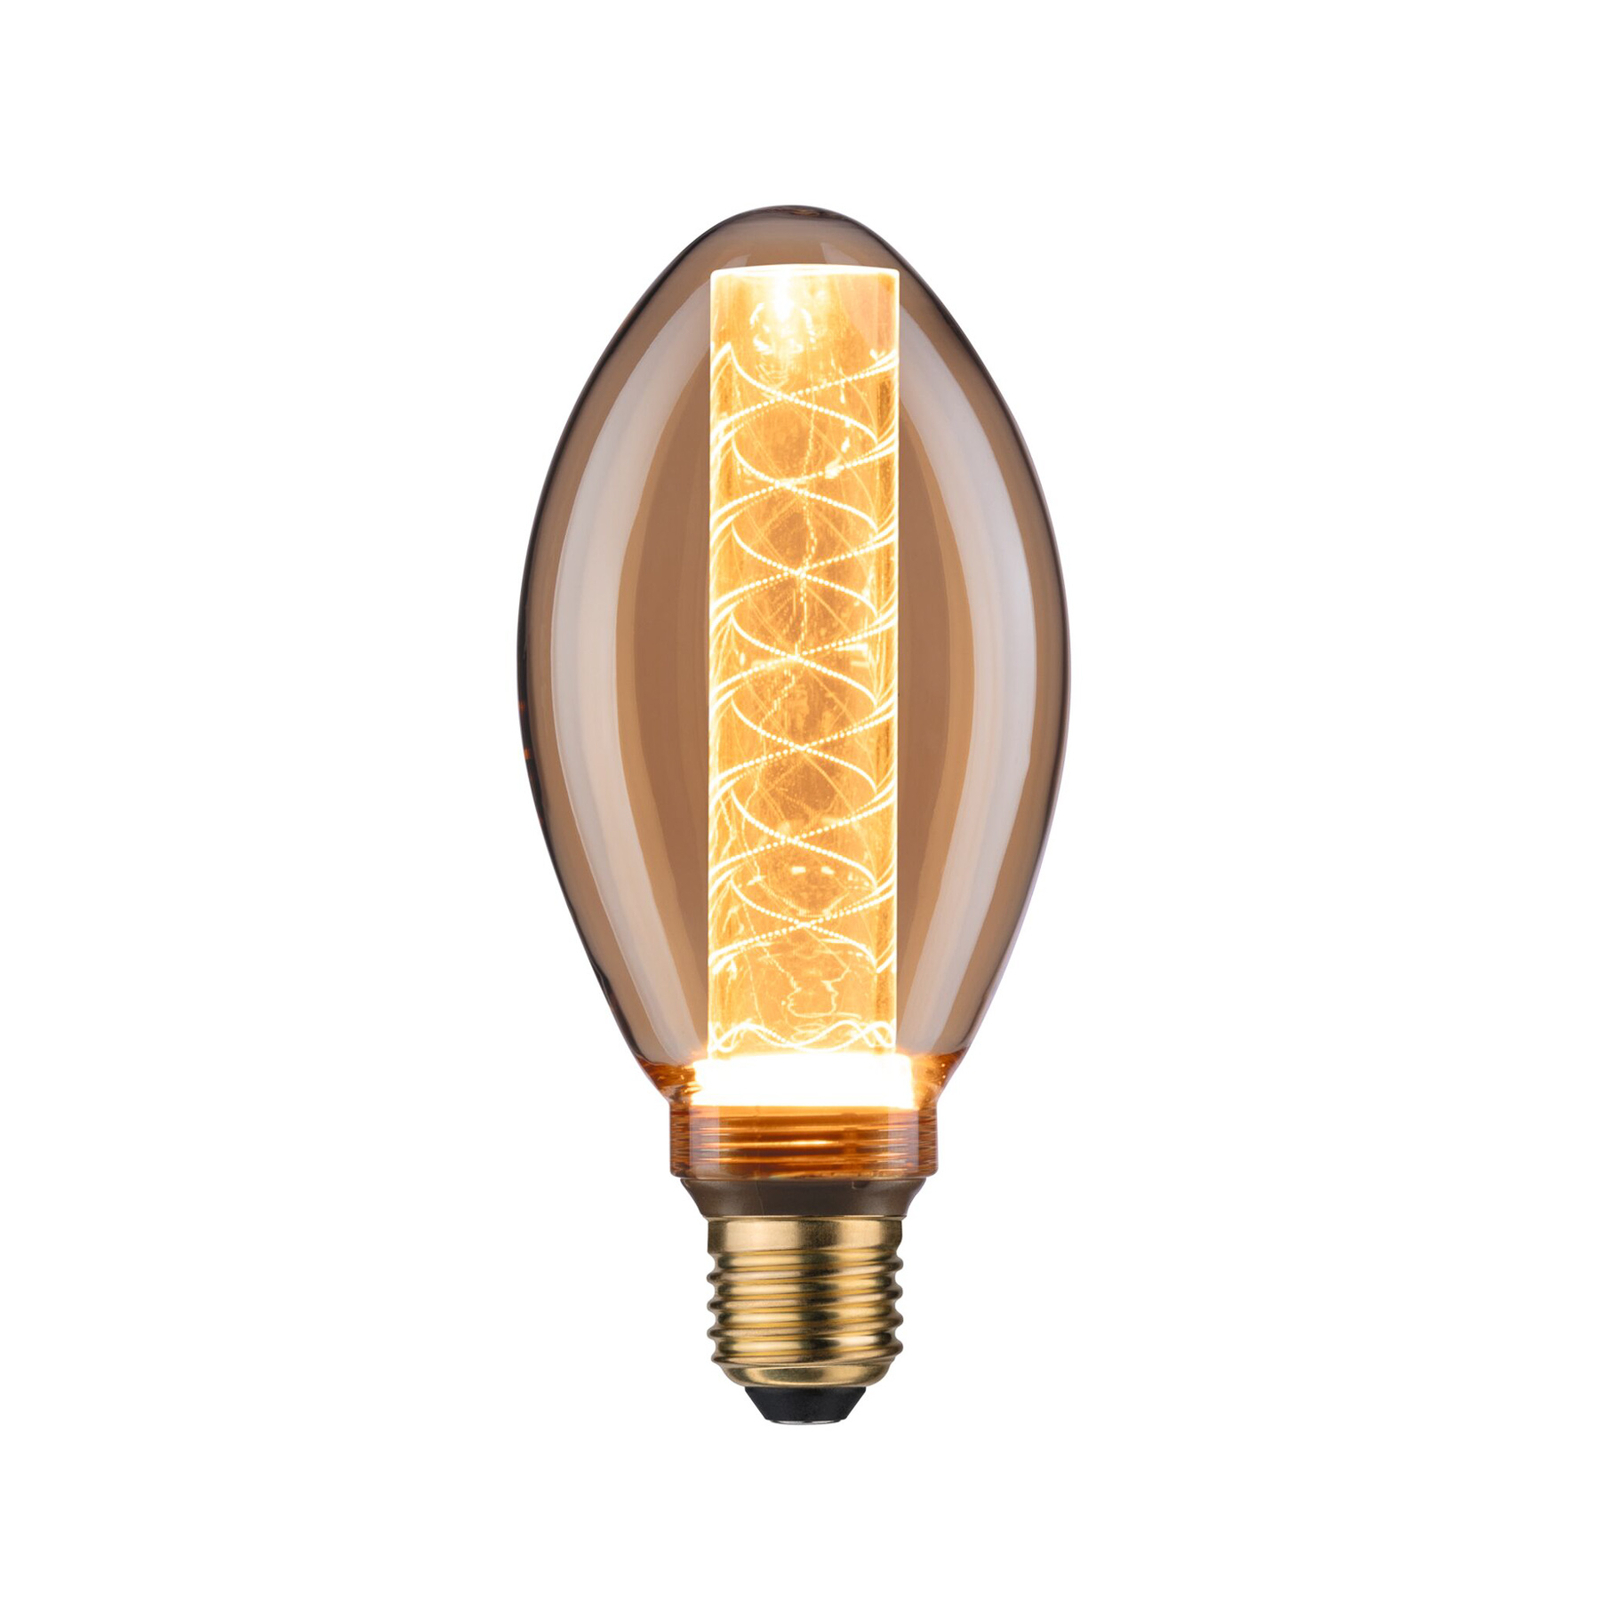 LED bulb E27 B75 4W Inner Glow spiral pattern